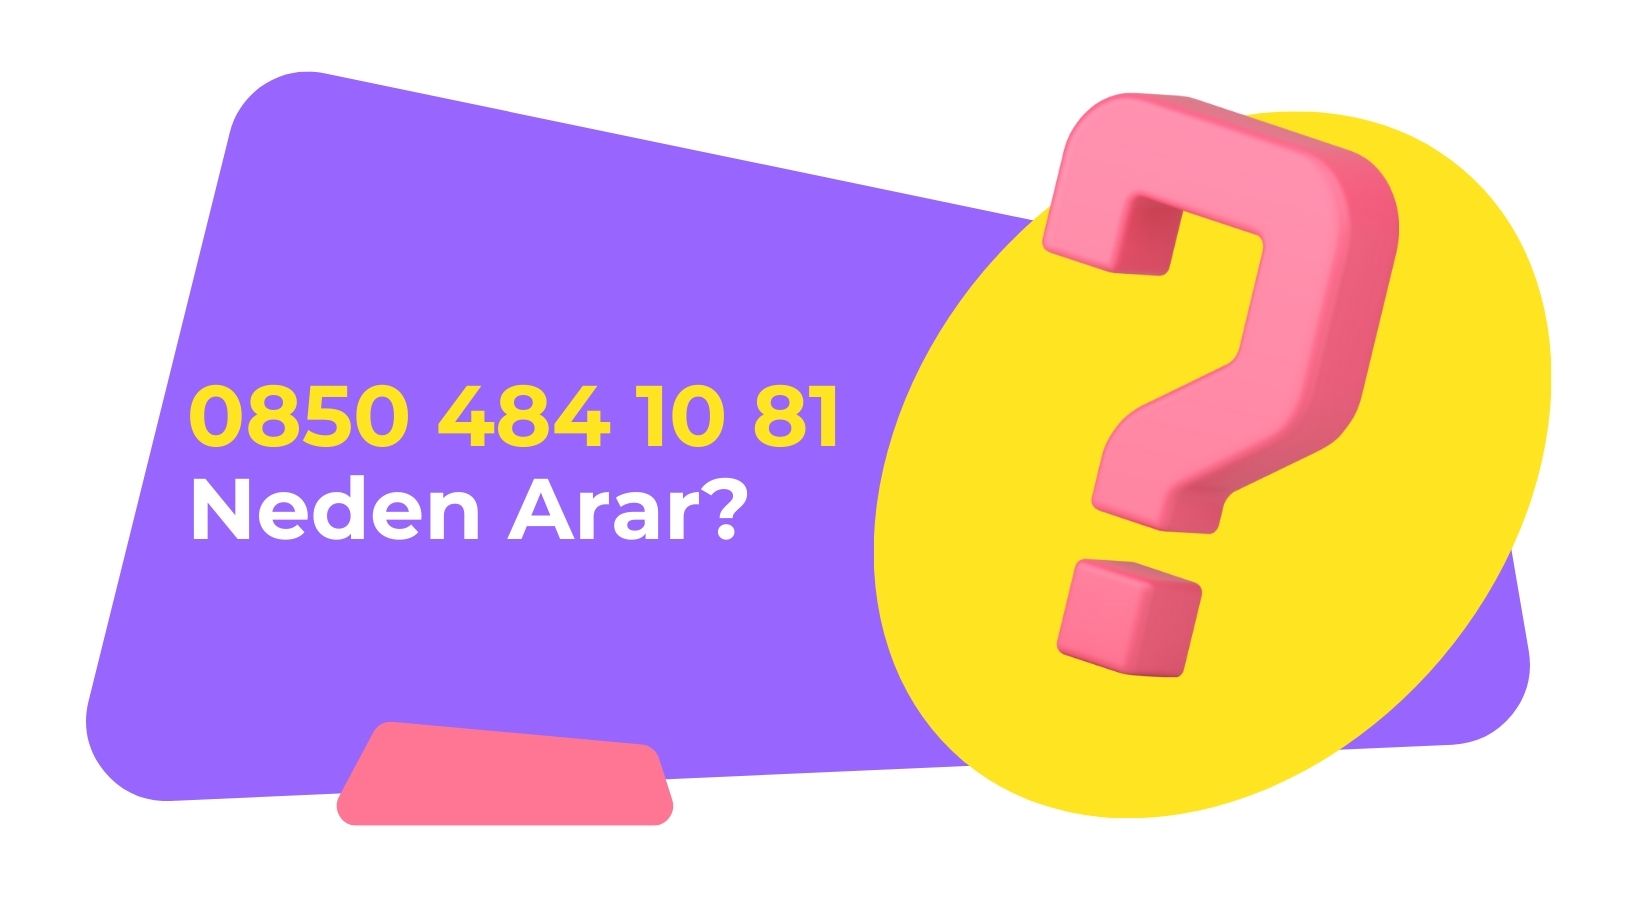 08504841081 Neden Arar?